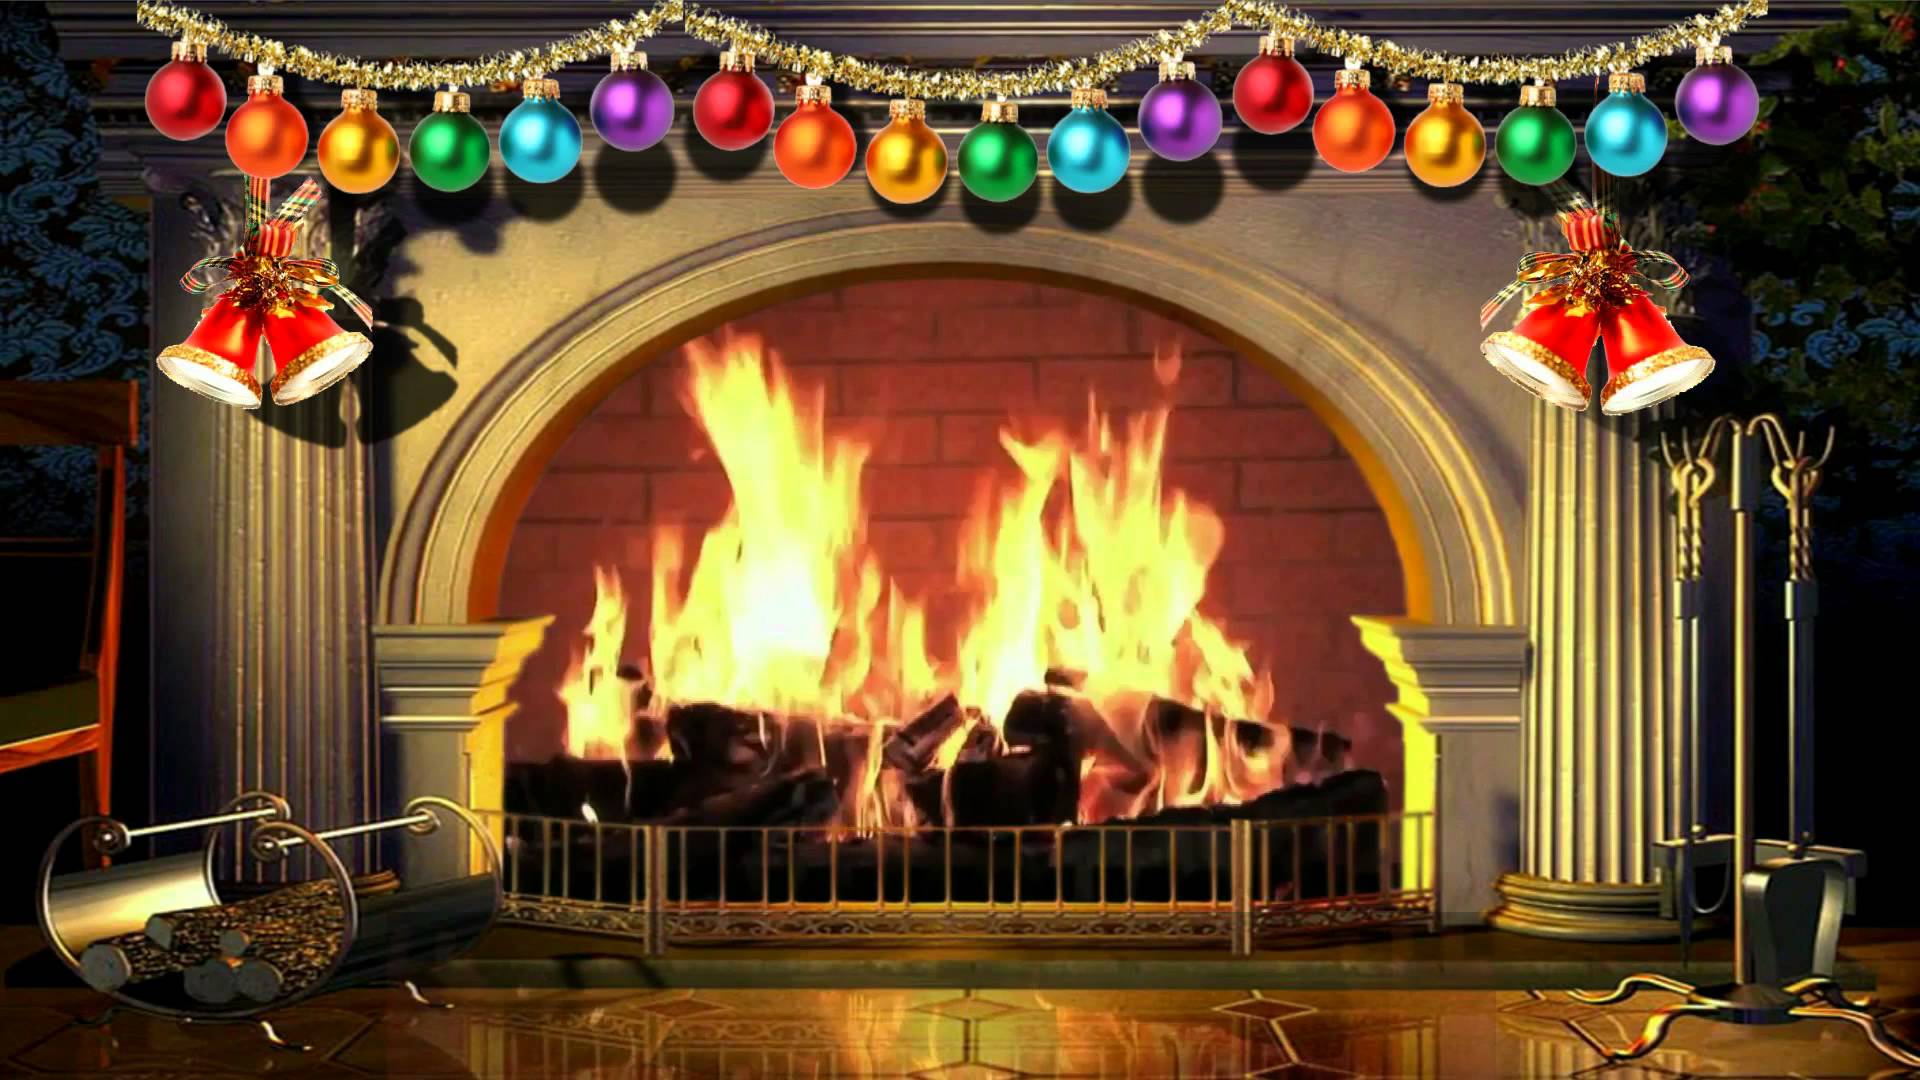 chimney clipart fireplace scene